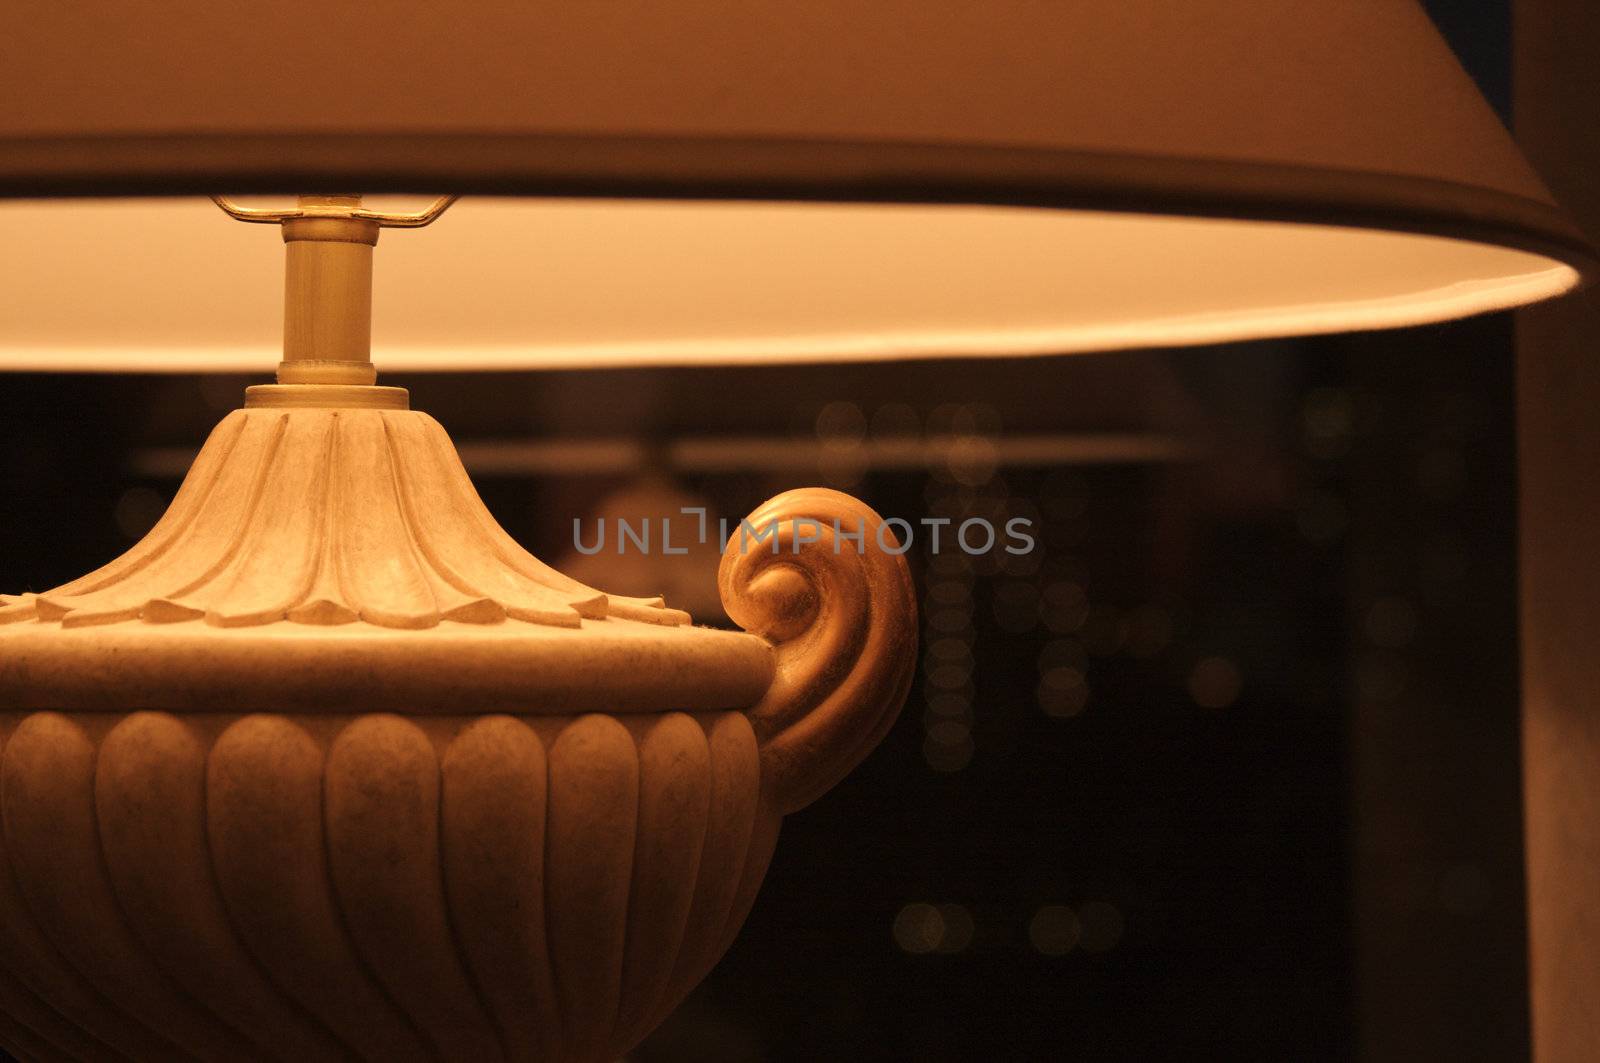 Close-up of an Eligant Decorative Desk Lamp